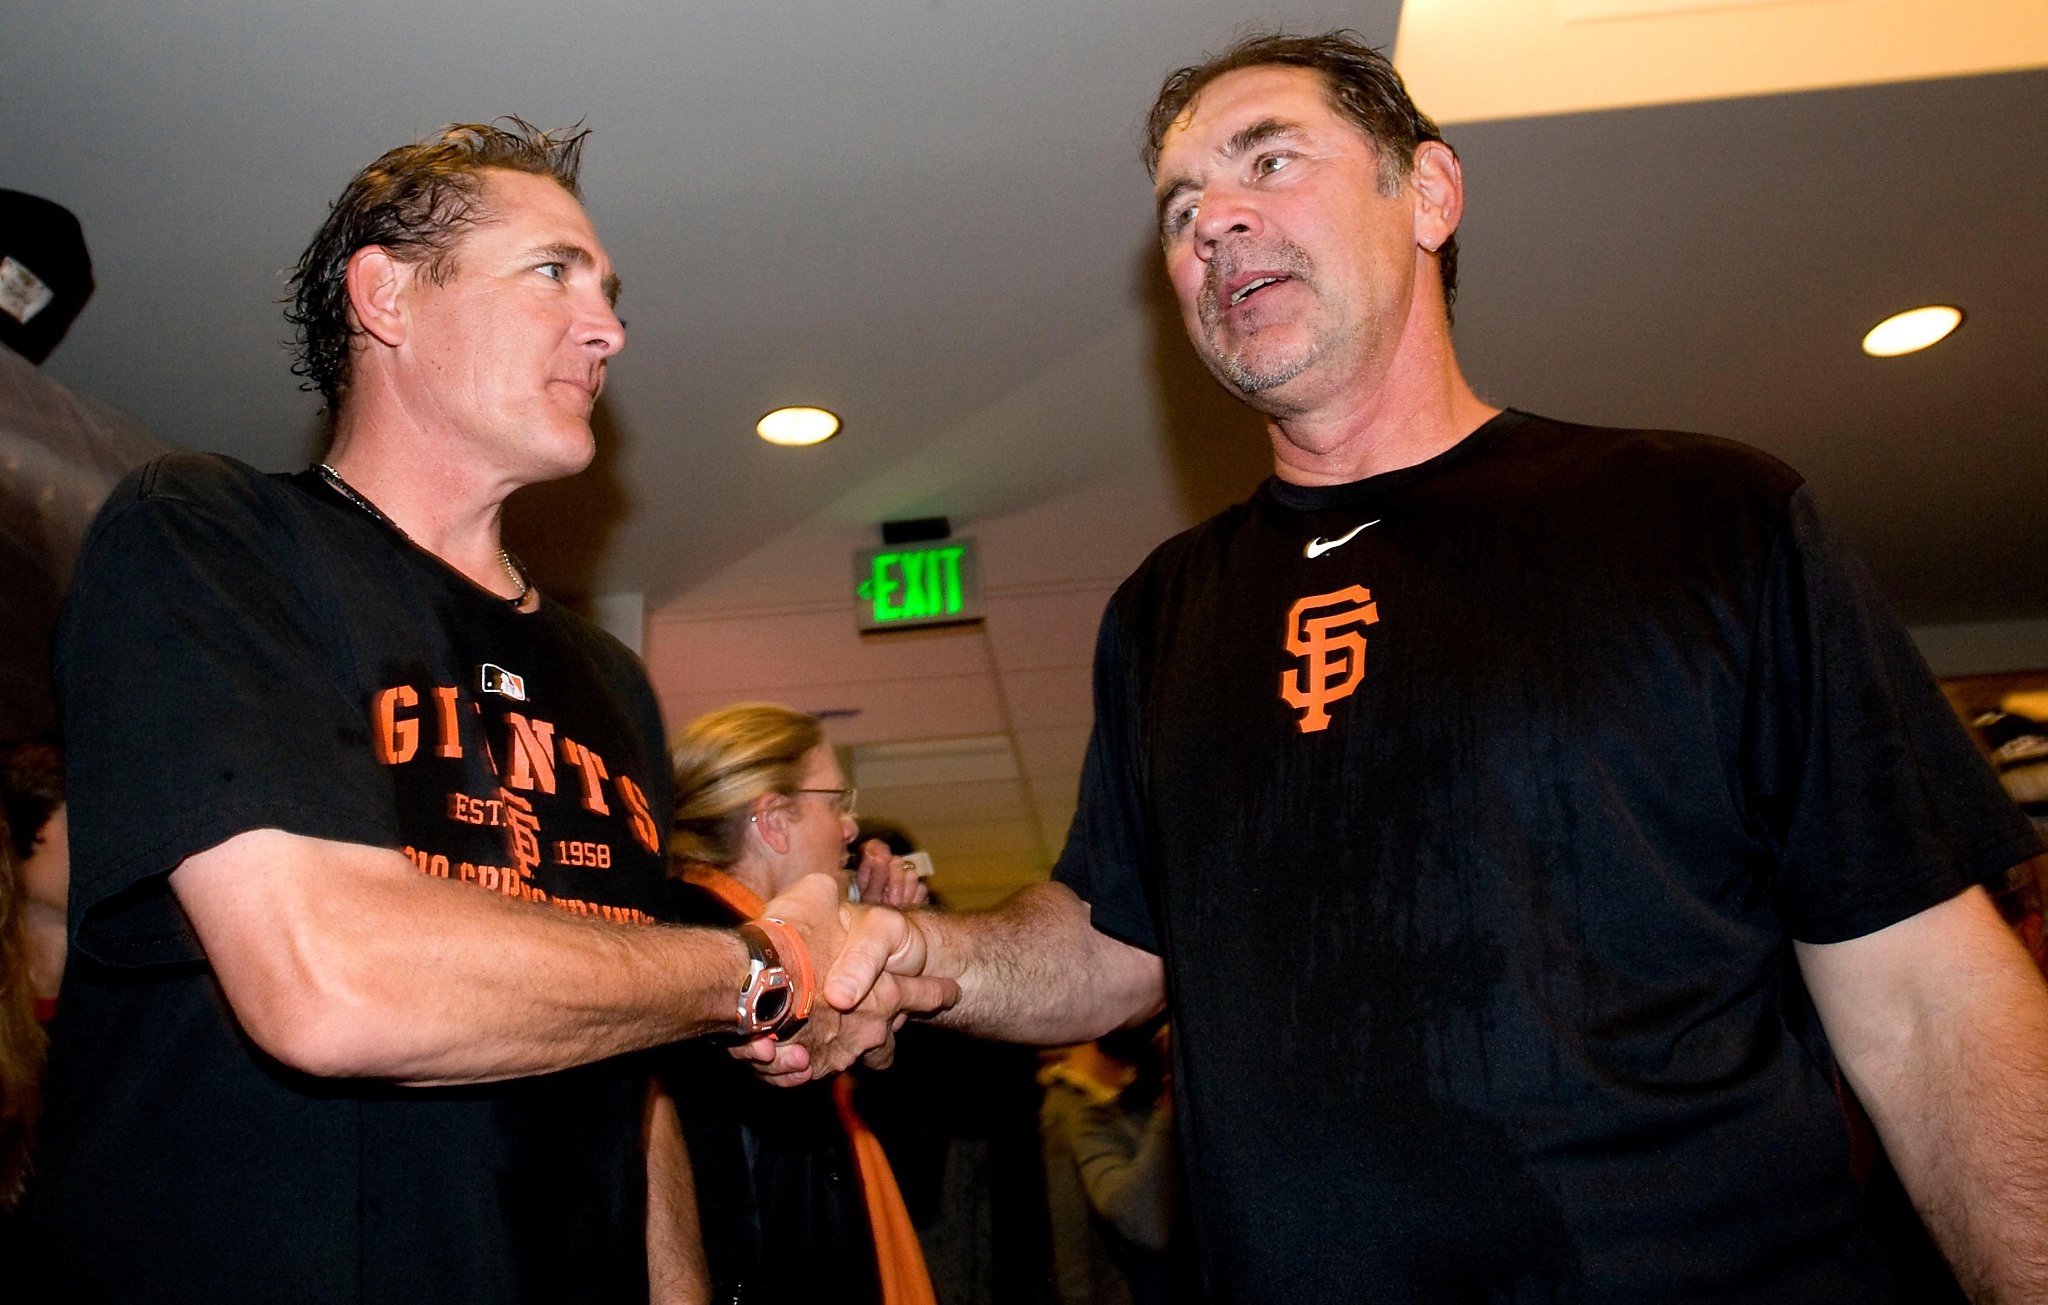 Giants Splash: 10 reflections on SF's 2010 World Series